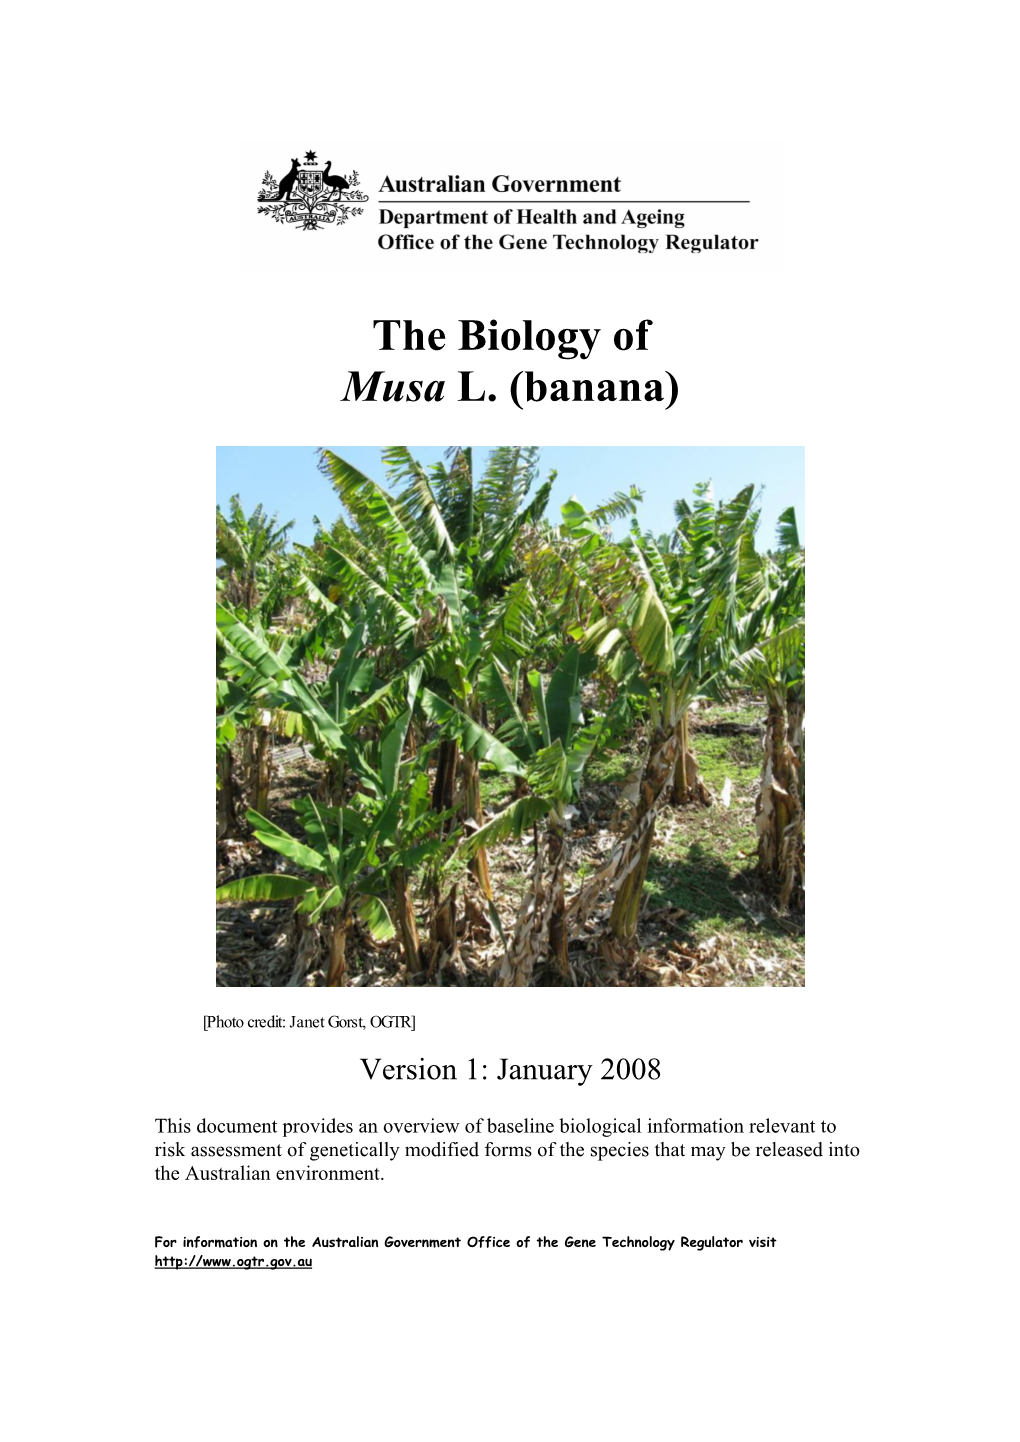 The Biology of Musa L. (Banana)